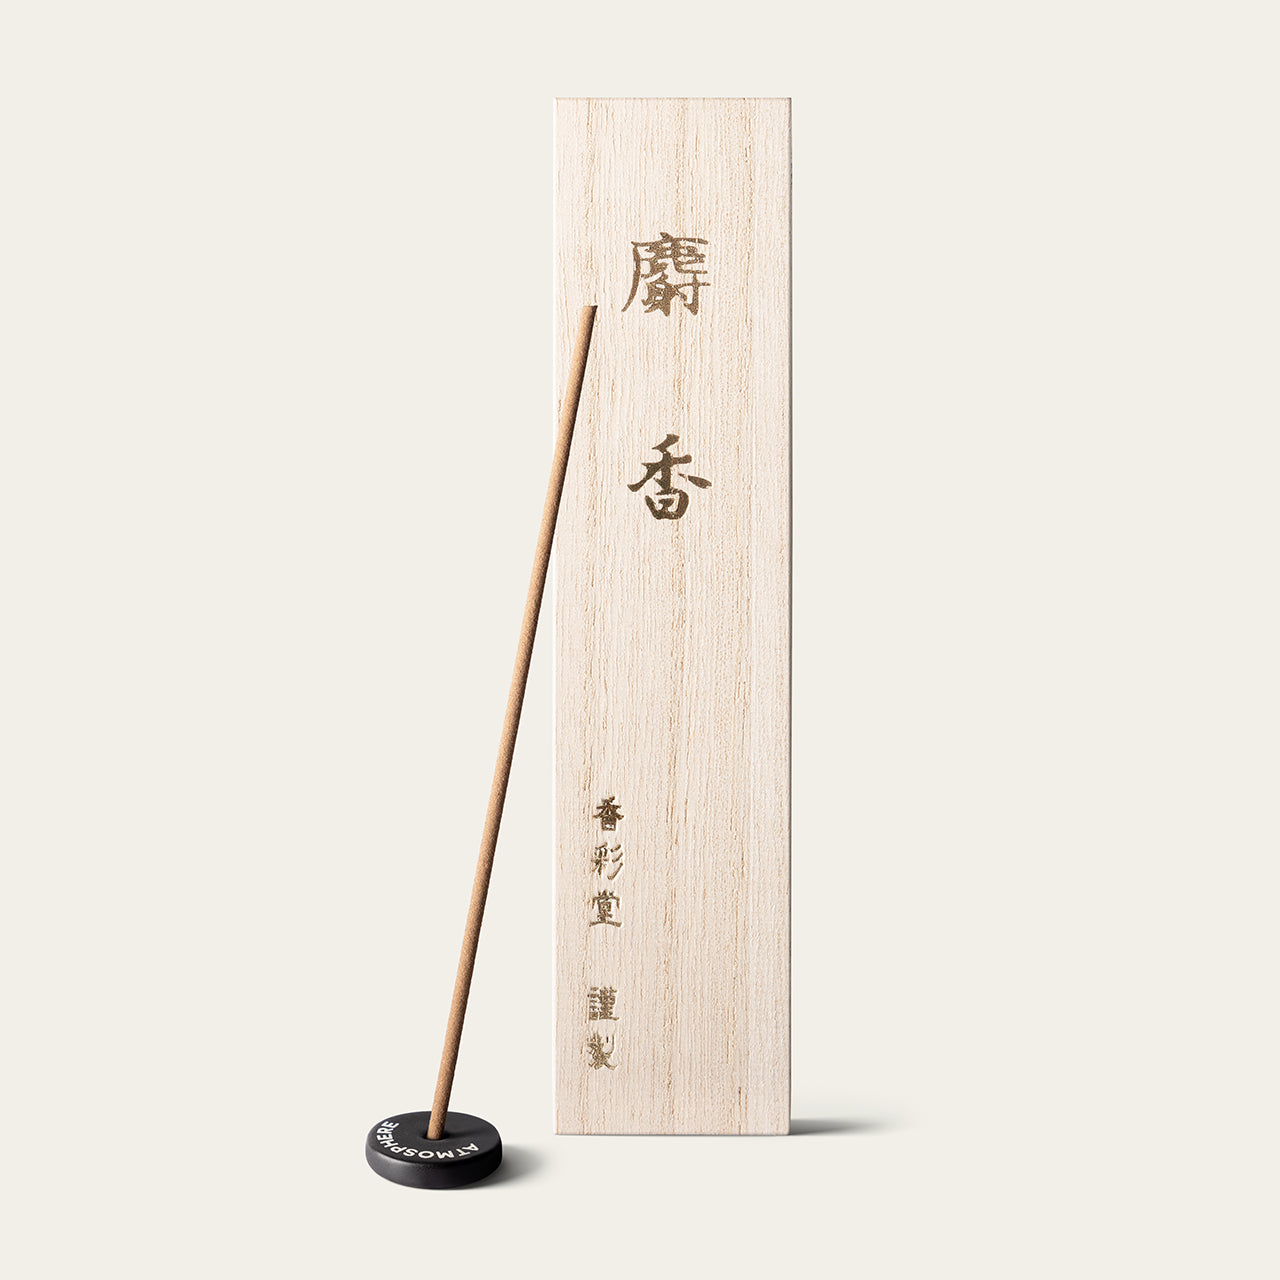 Kousaido Premium Musk Japanese incense sticks (55 sticks) with Atmosphere ceramic incense holder